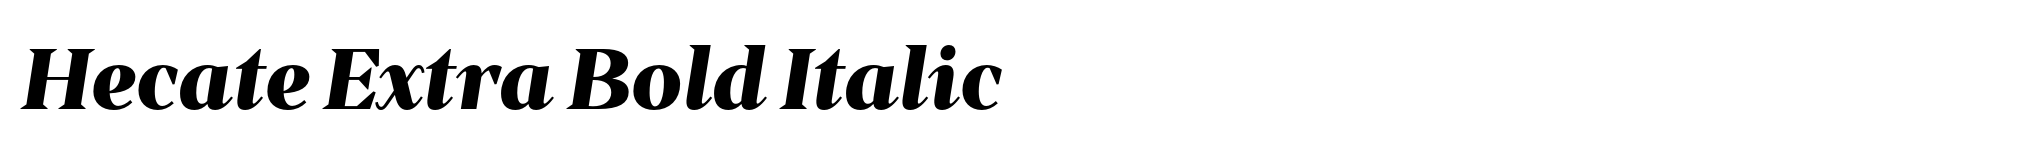 Hecate Extra Bold Italic image